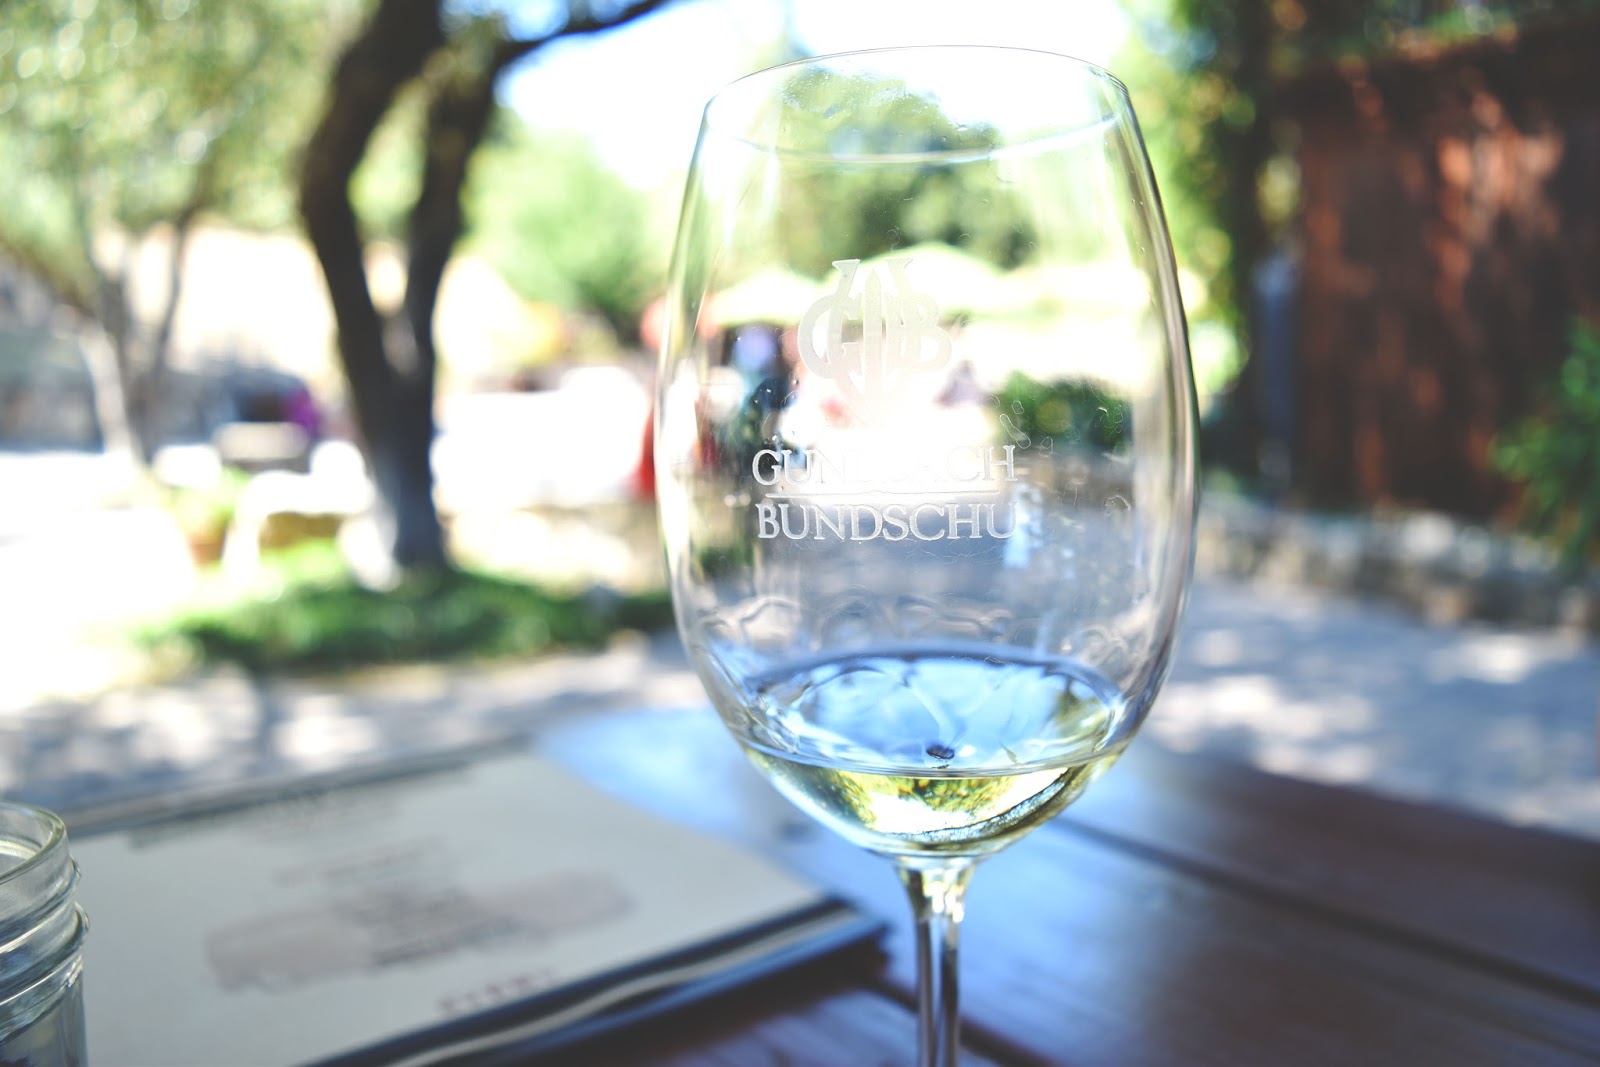 Gundlach Bundschu - a winery in Sonoma, California